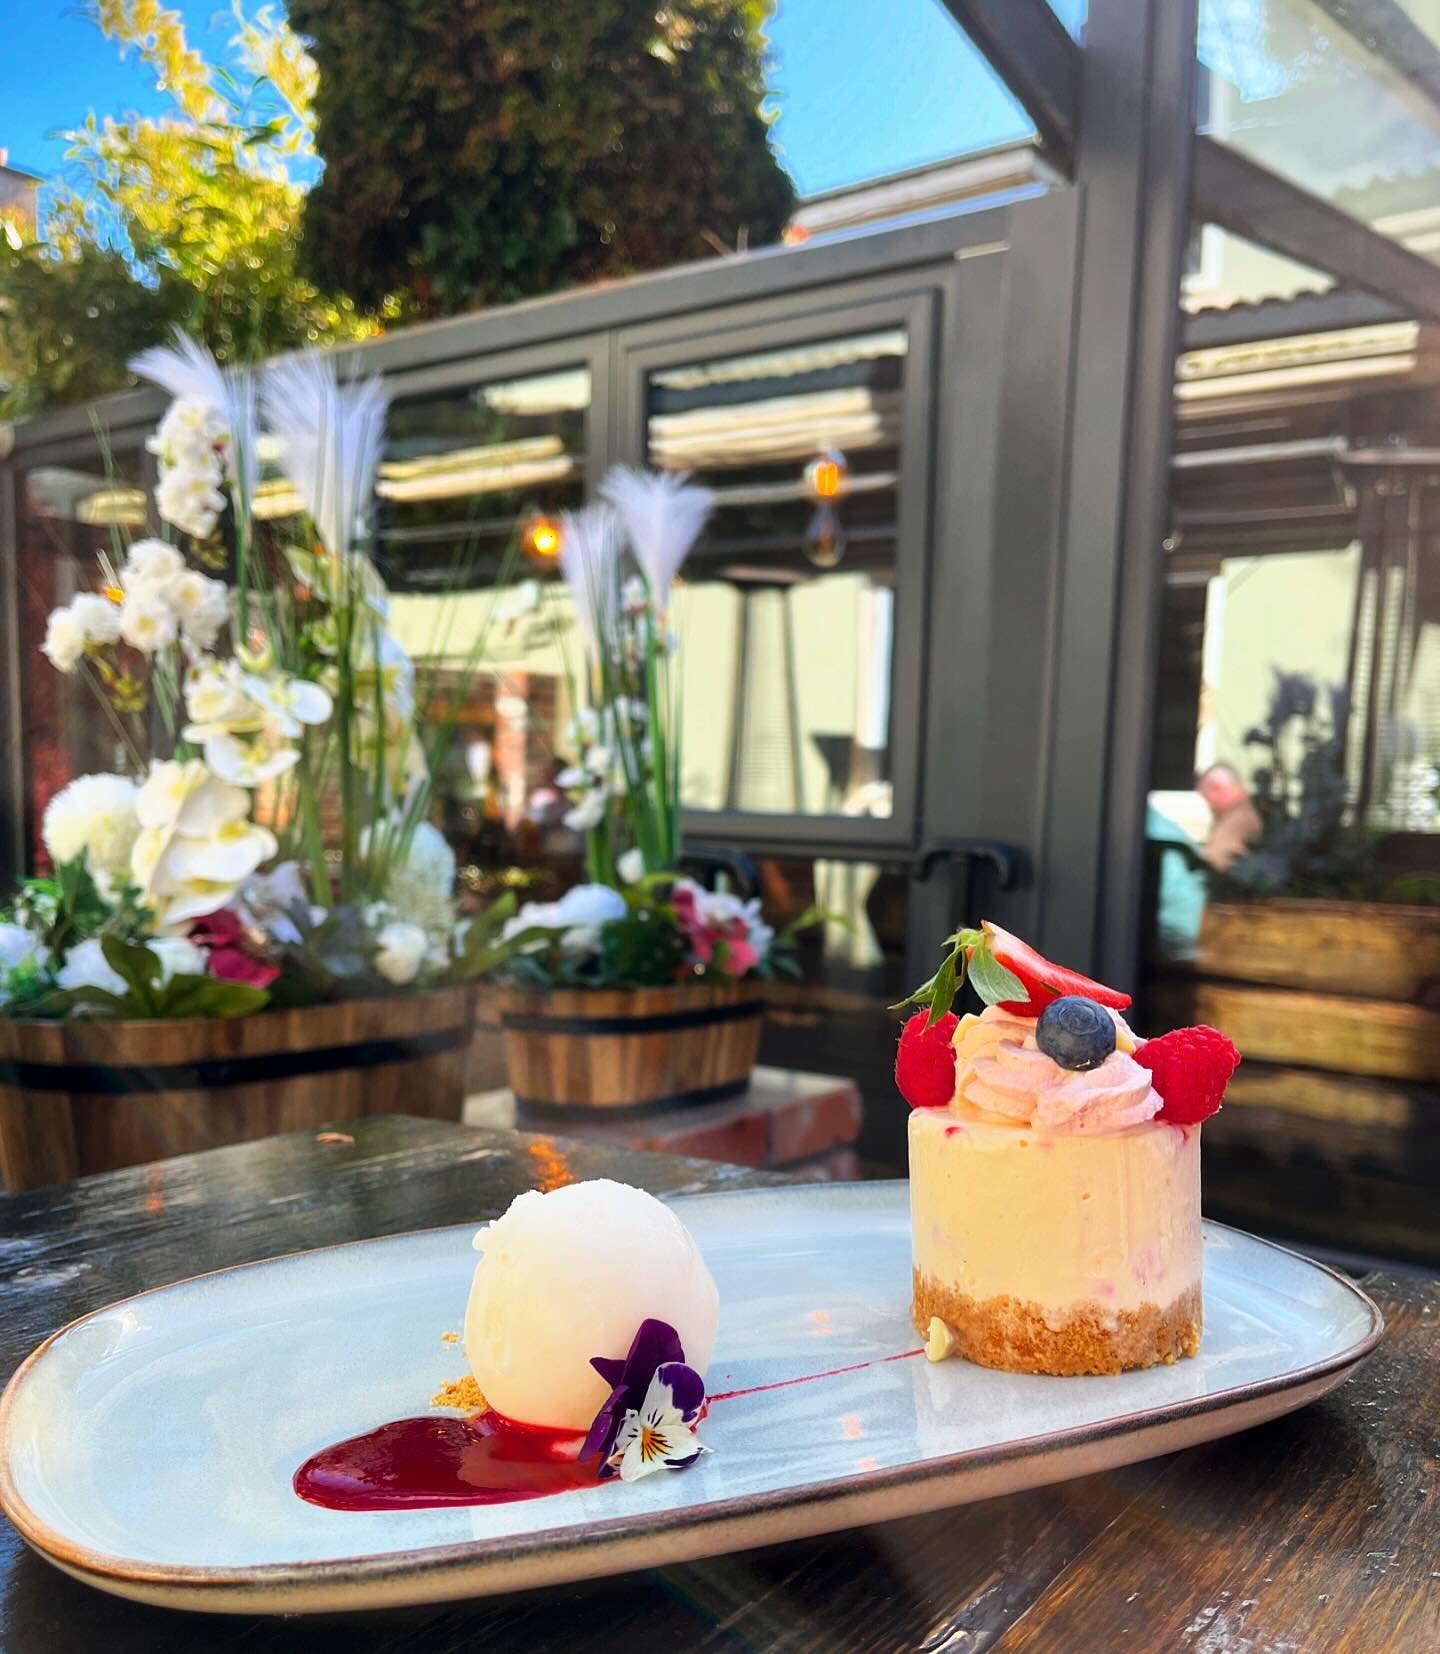 Treats in the Garden 🌞🌳🍰
Cheesecake of the Week is  Raspberry &amp; White Chocolate with Lemon Sorbet 🌞🌳🌞 
#buffaloboysteakhouse #carrickonshannon #leitrim #leitrimtourism #leitrimobserver